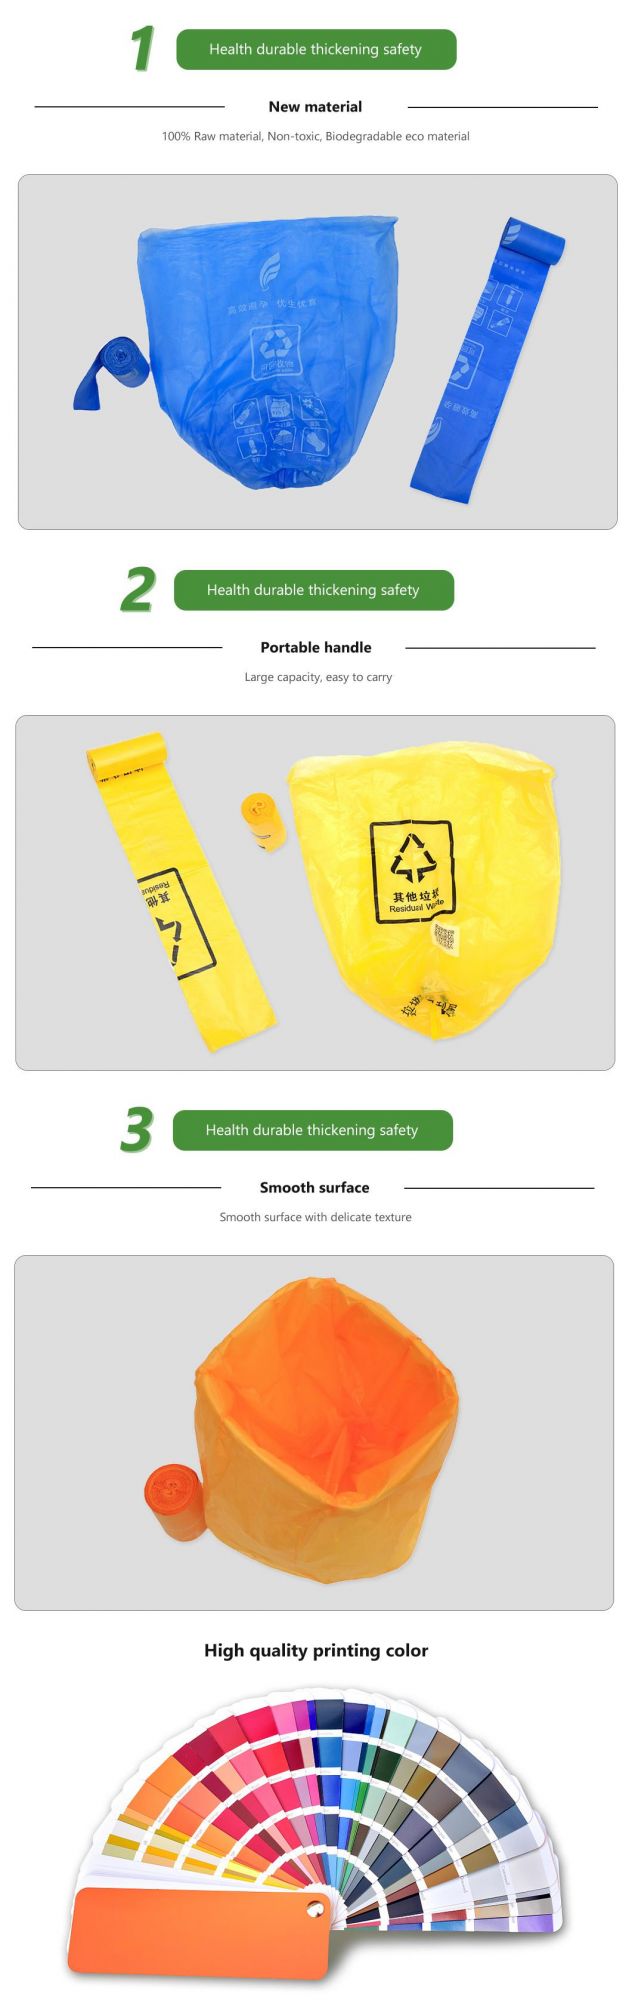 PLA+Pbat/Pbat+Corn Starch Biodegradable Bags, Compostable Bags, Rubbish Bags for Indoor